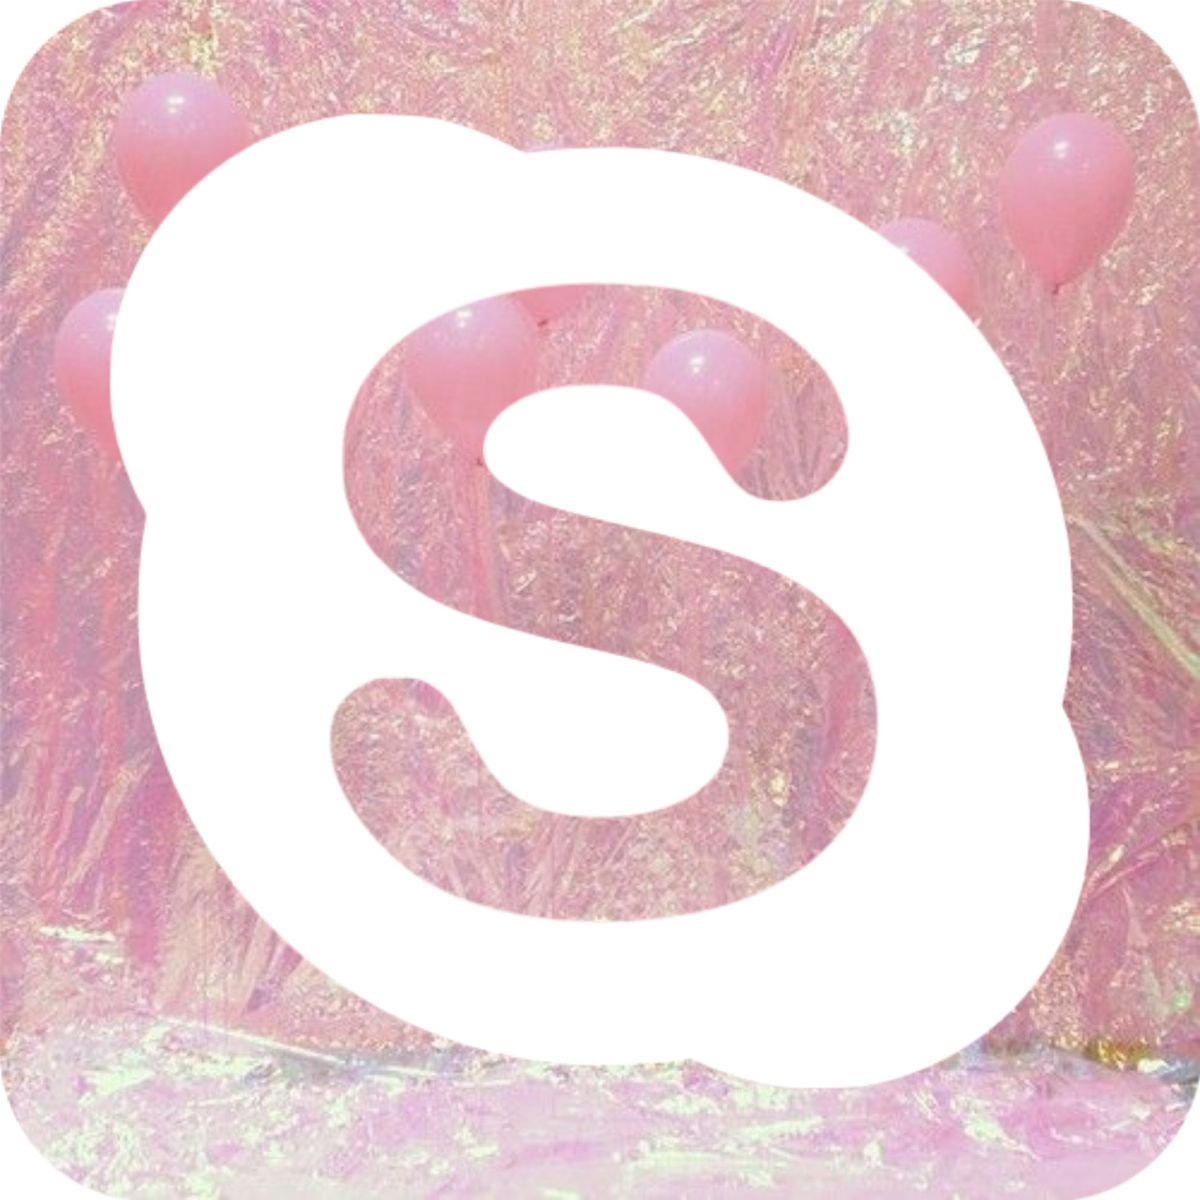  Skype Hintergrundbild 1200x1200. Skype app icon Aesthetic Pink. Aesthetic themes, Icon, App icon